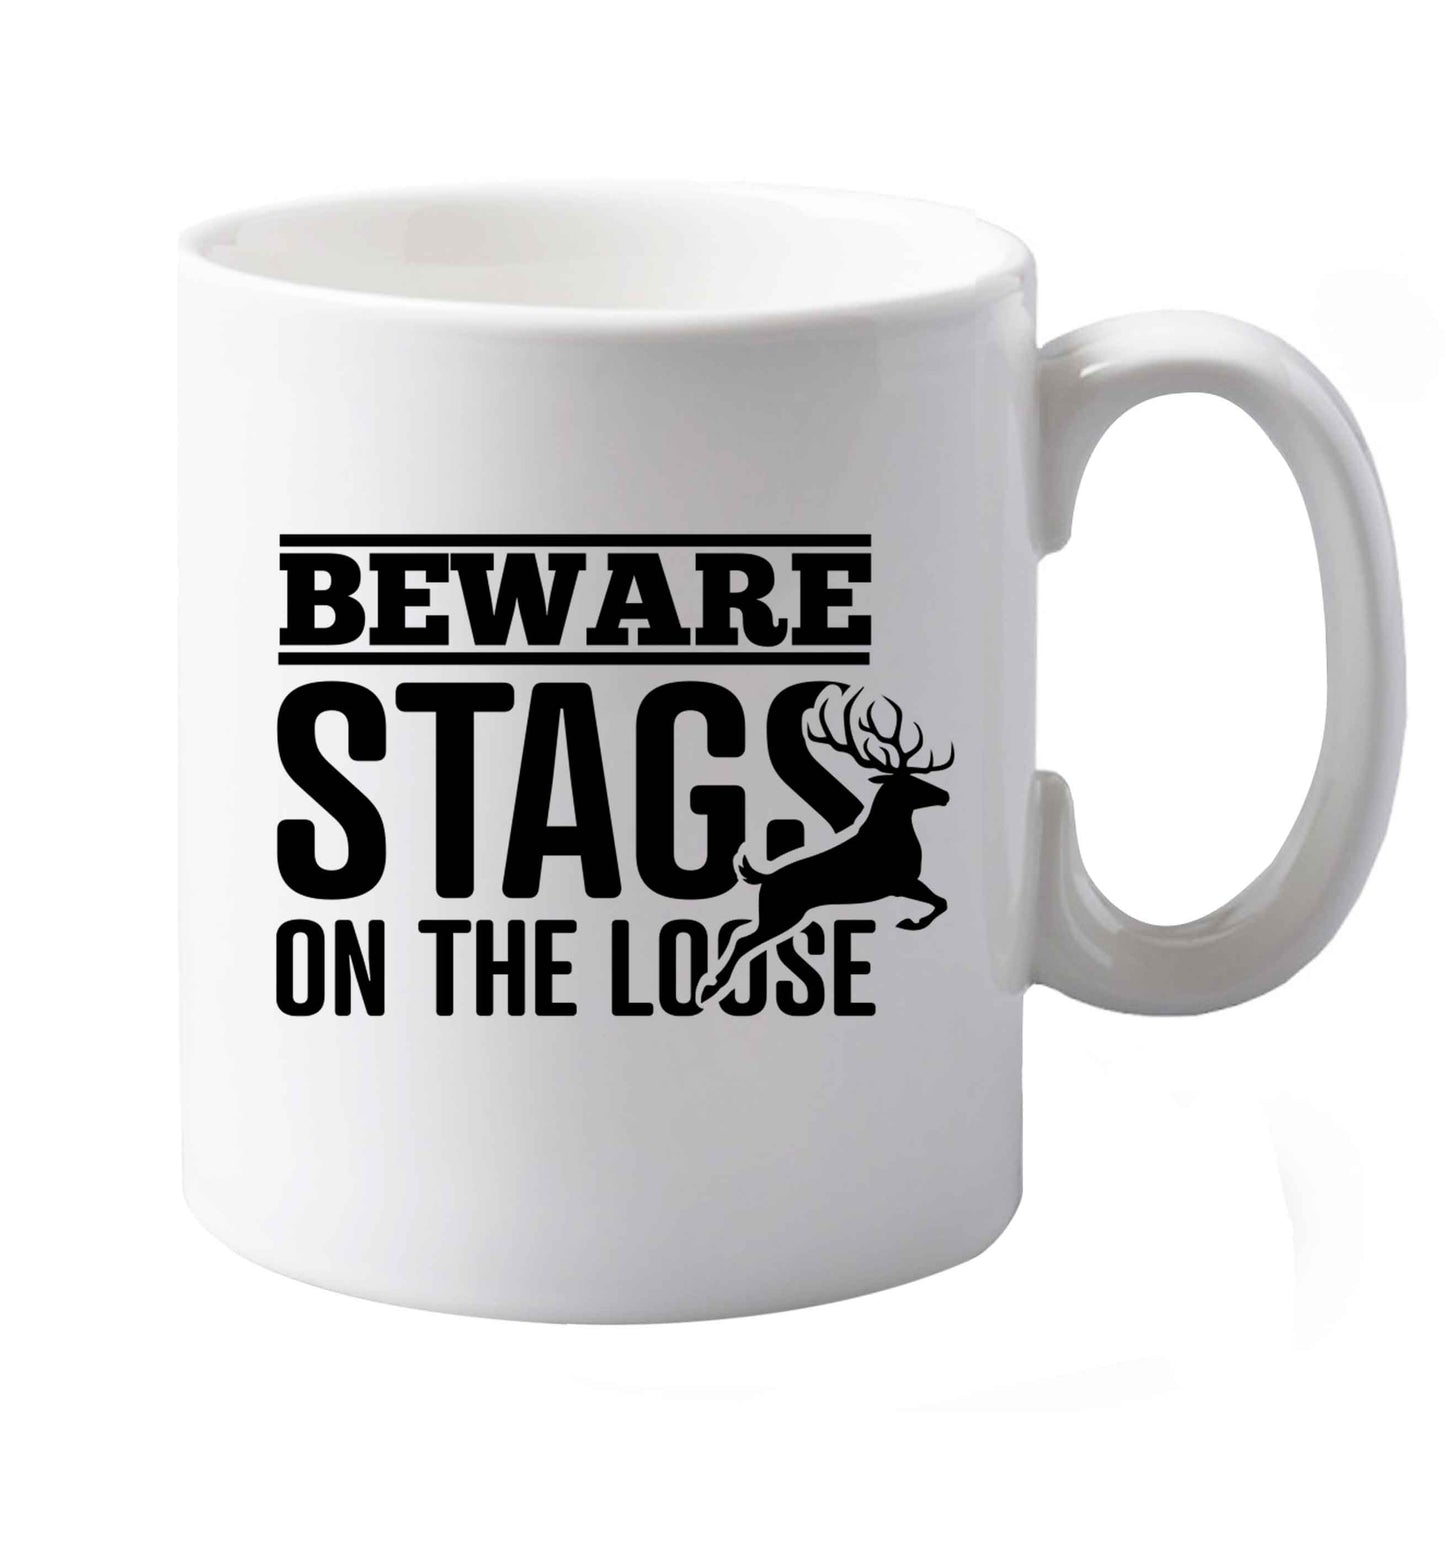 10 oz Beware stags on the loose   ceramic mug both sides